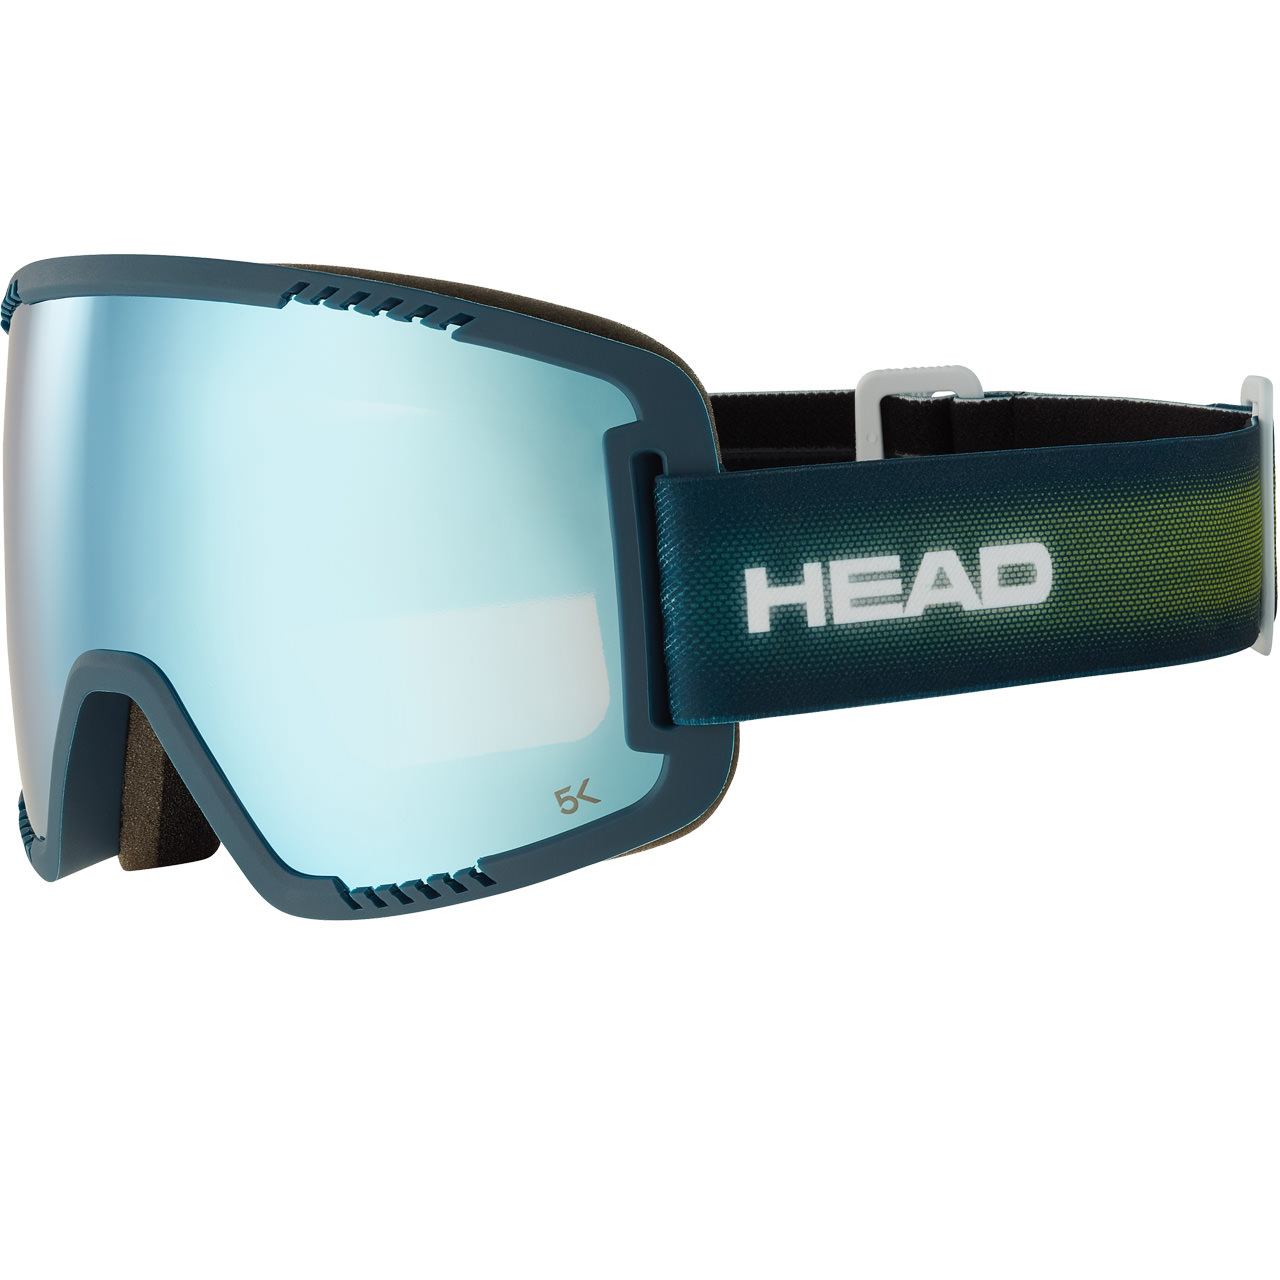 Head Contex Pro 5K blue SHAPE |Head Ski Goggles | Head | H | BRANDS ...